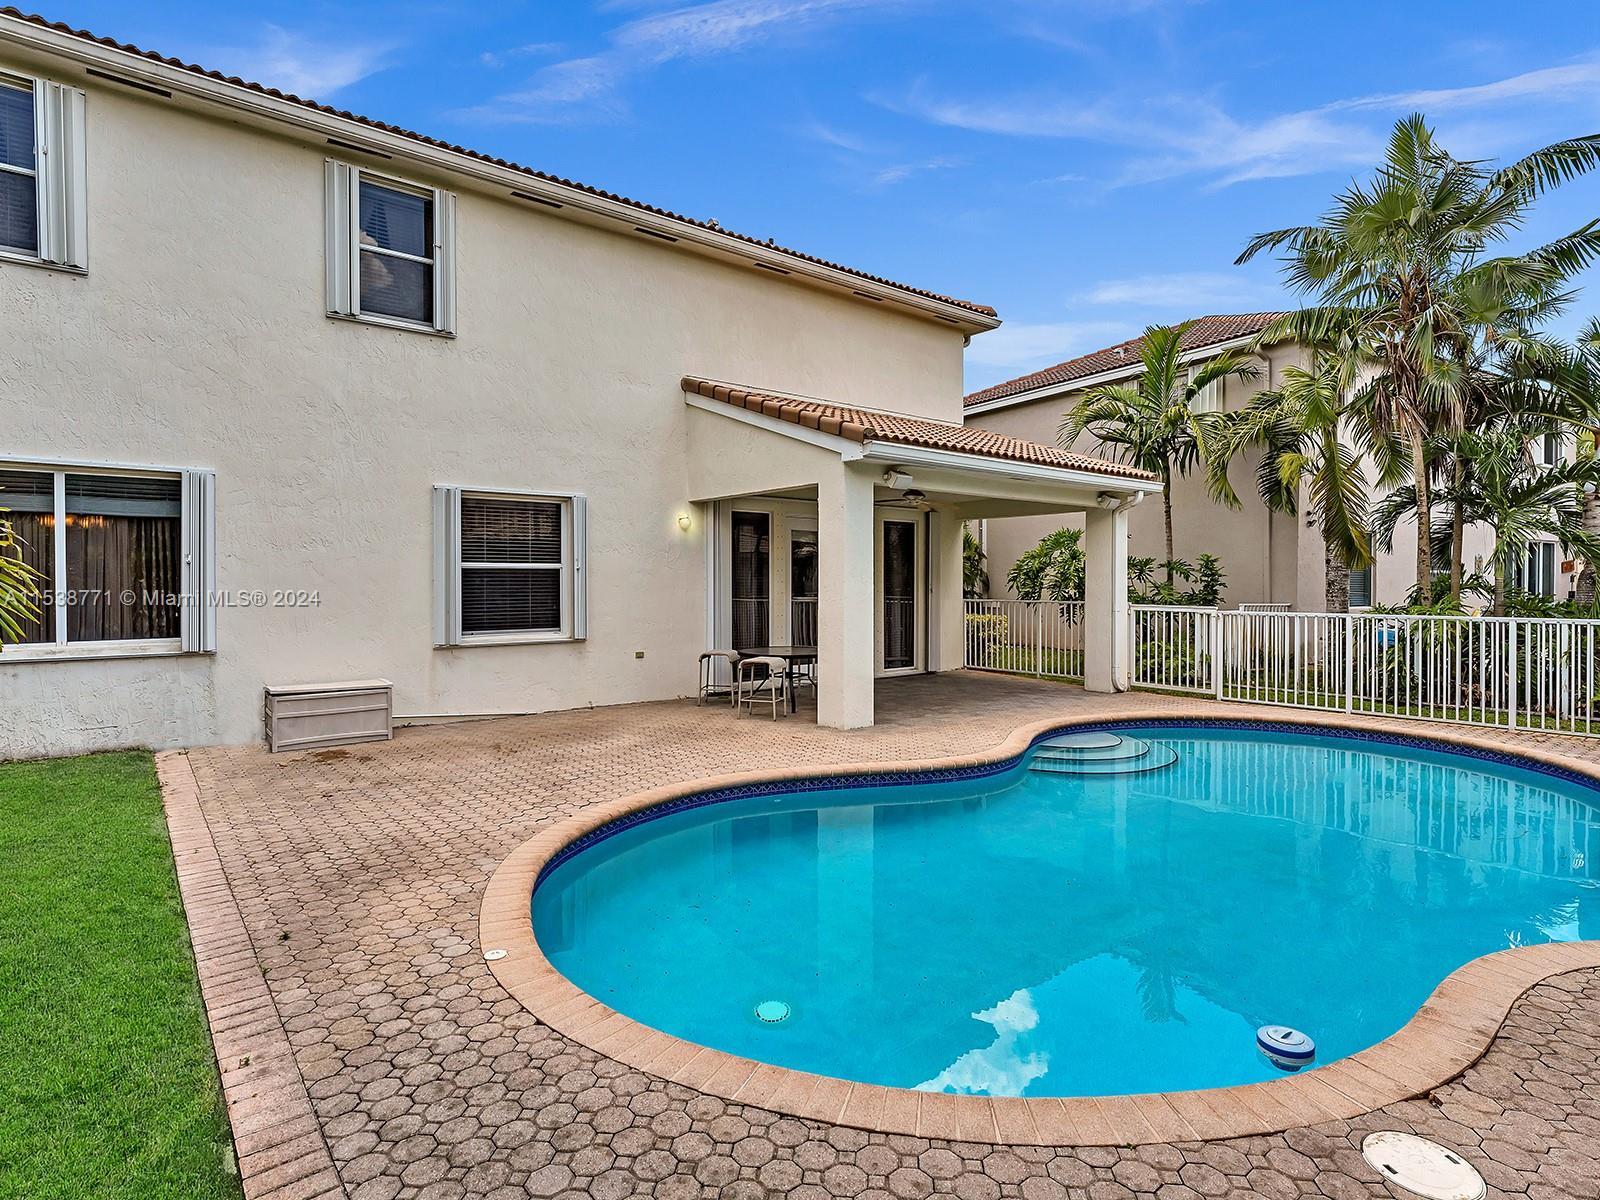 Rental Property at 2022 Sw 176th Ave, Miramar, Broward County, Florida - Bedrooms: 4 
Bathrooms: 3  - $8,000 MO.